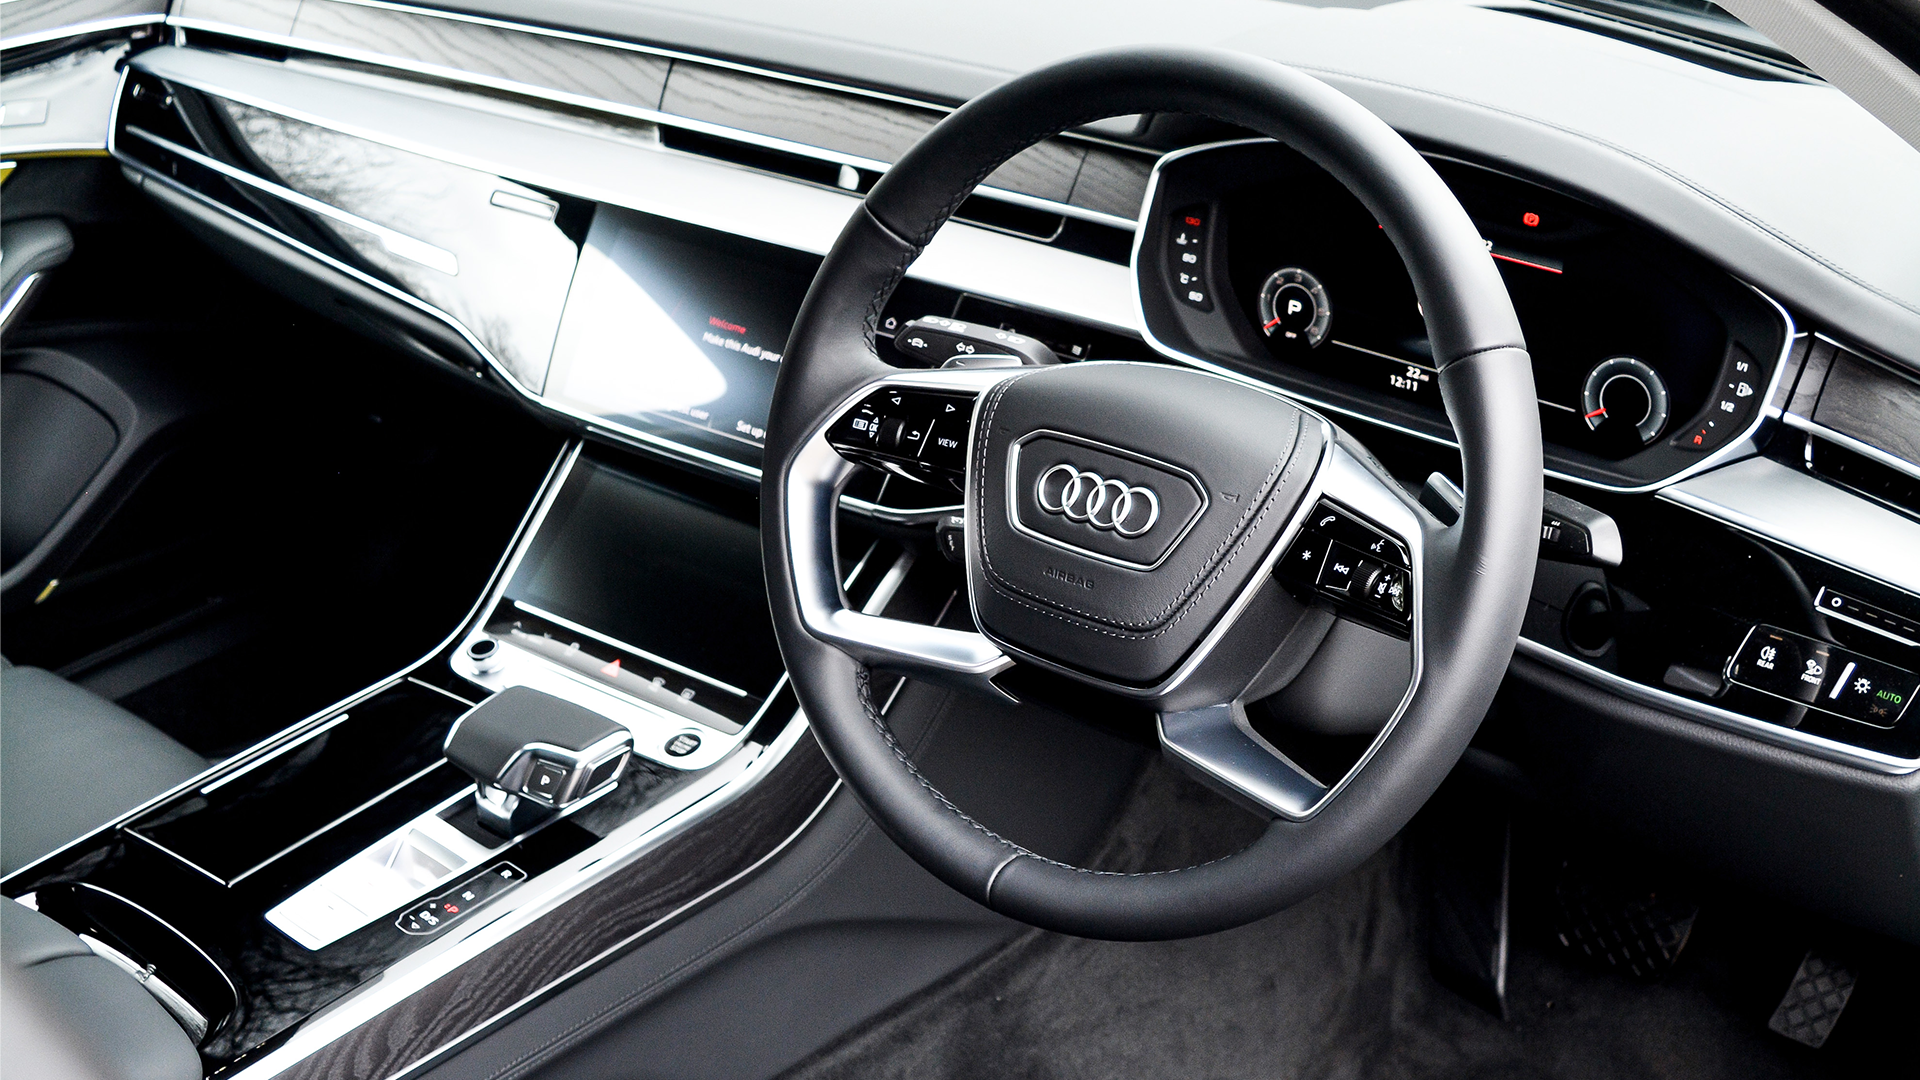 Audi A8 black interior driver side view